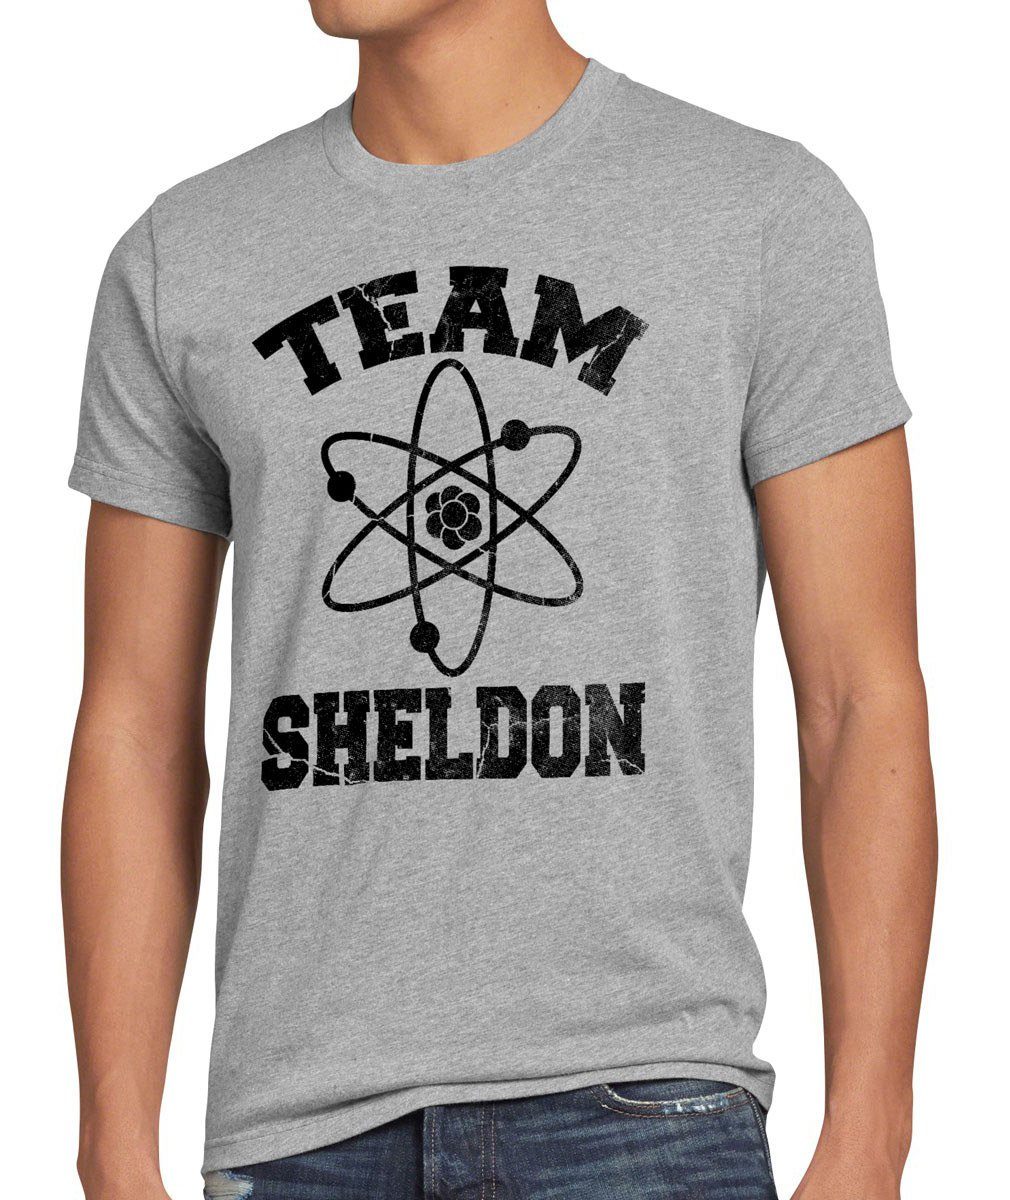 style3 Print-Shirt Herren T-Shirt Sheldon College Team big cooper theory leonard bang tbbt football grau meliert